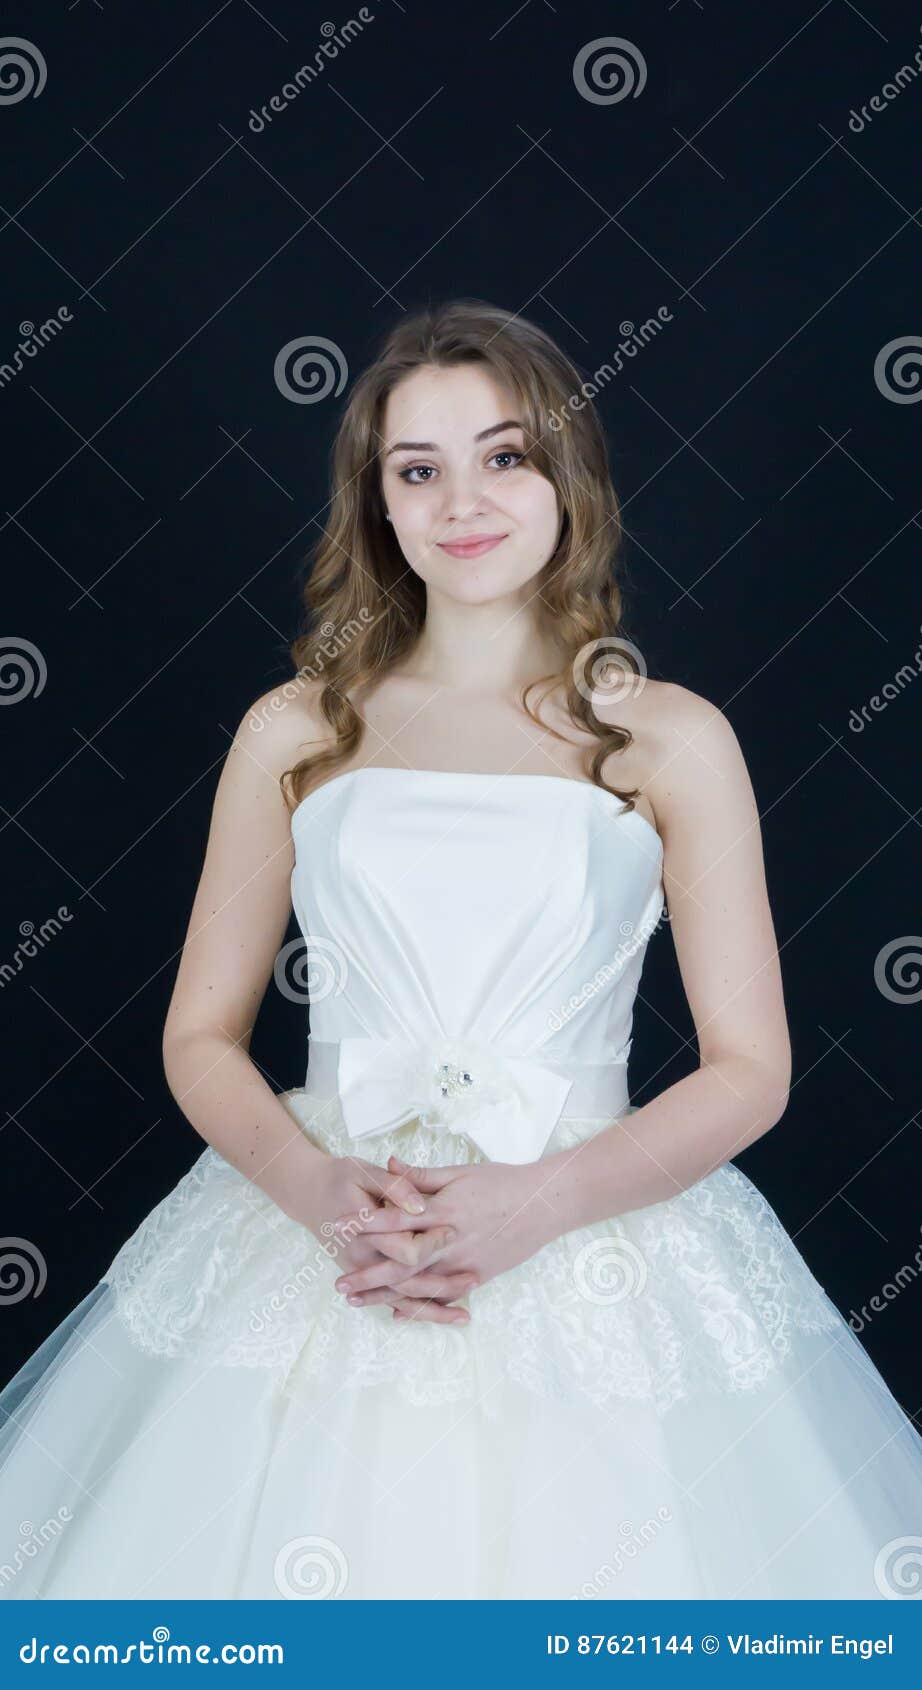 Beautiful Bride On Black Background. Dress Stock Photo - Image of ...